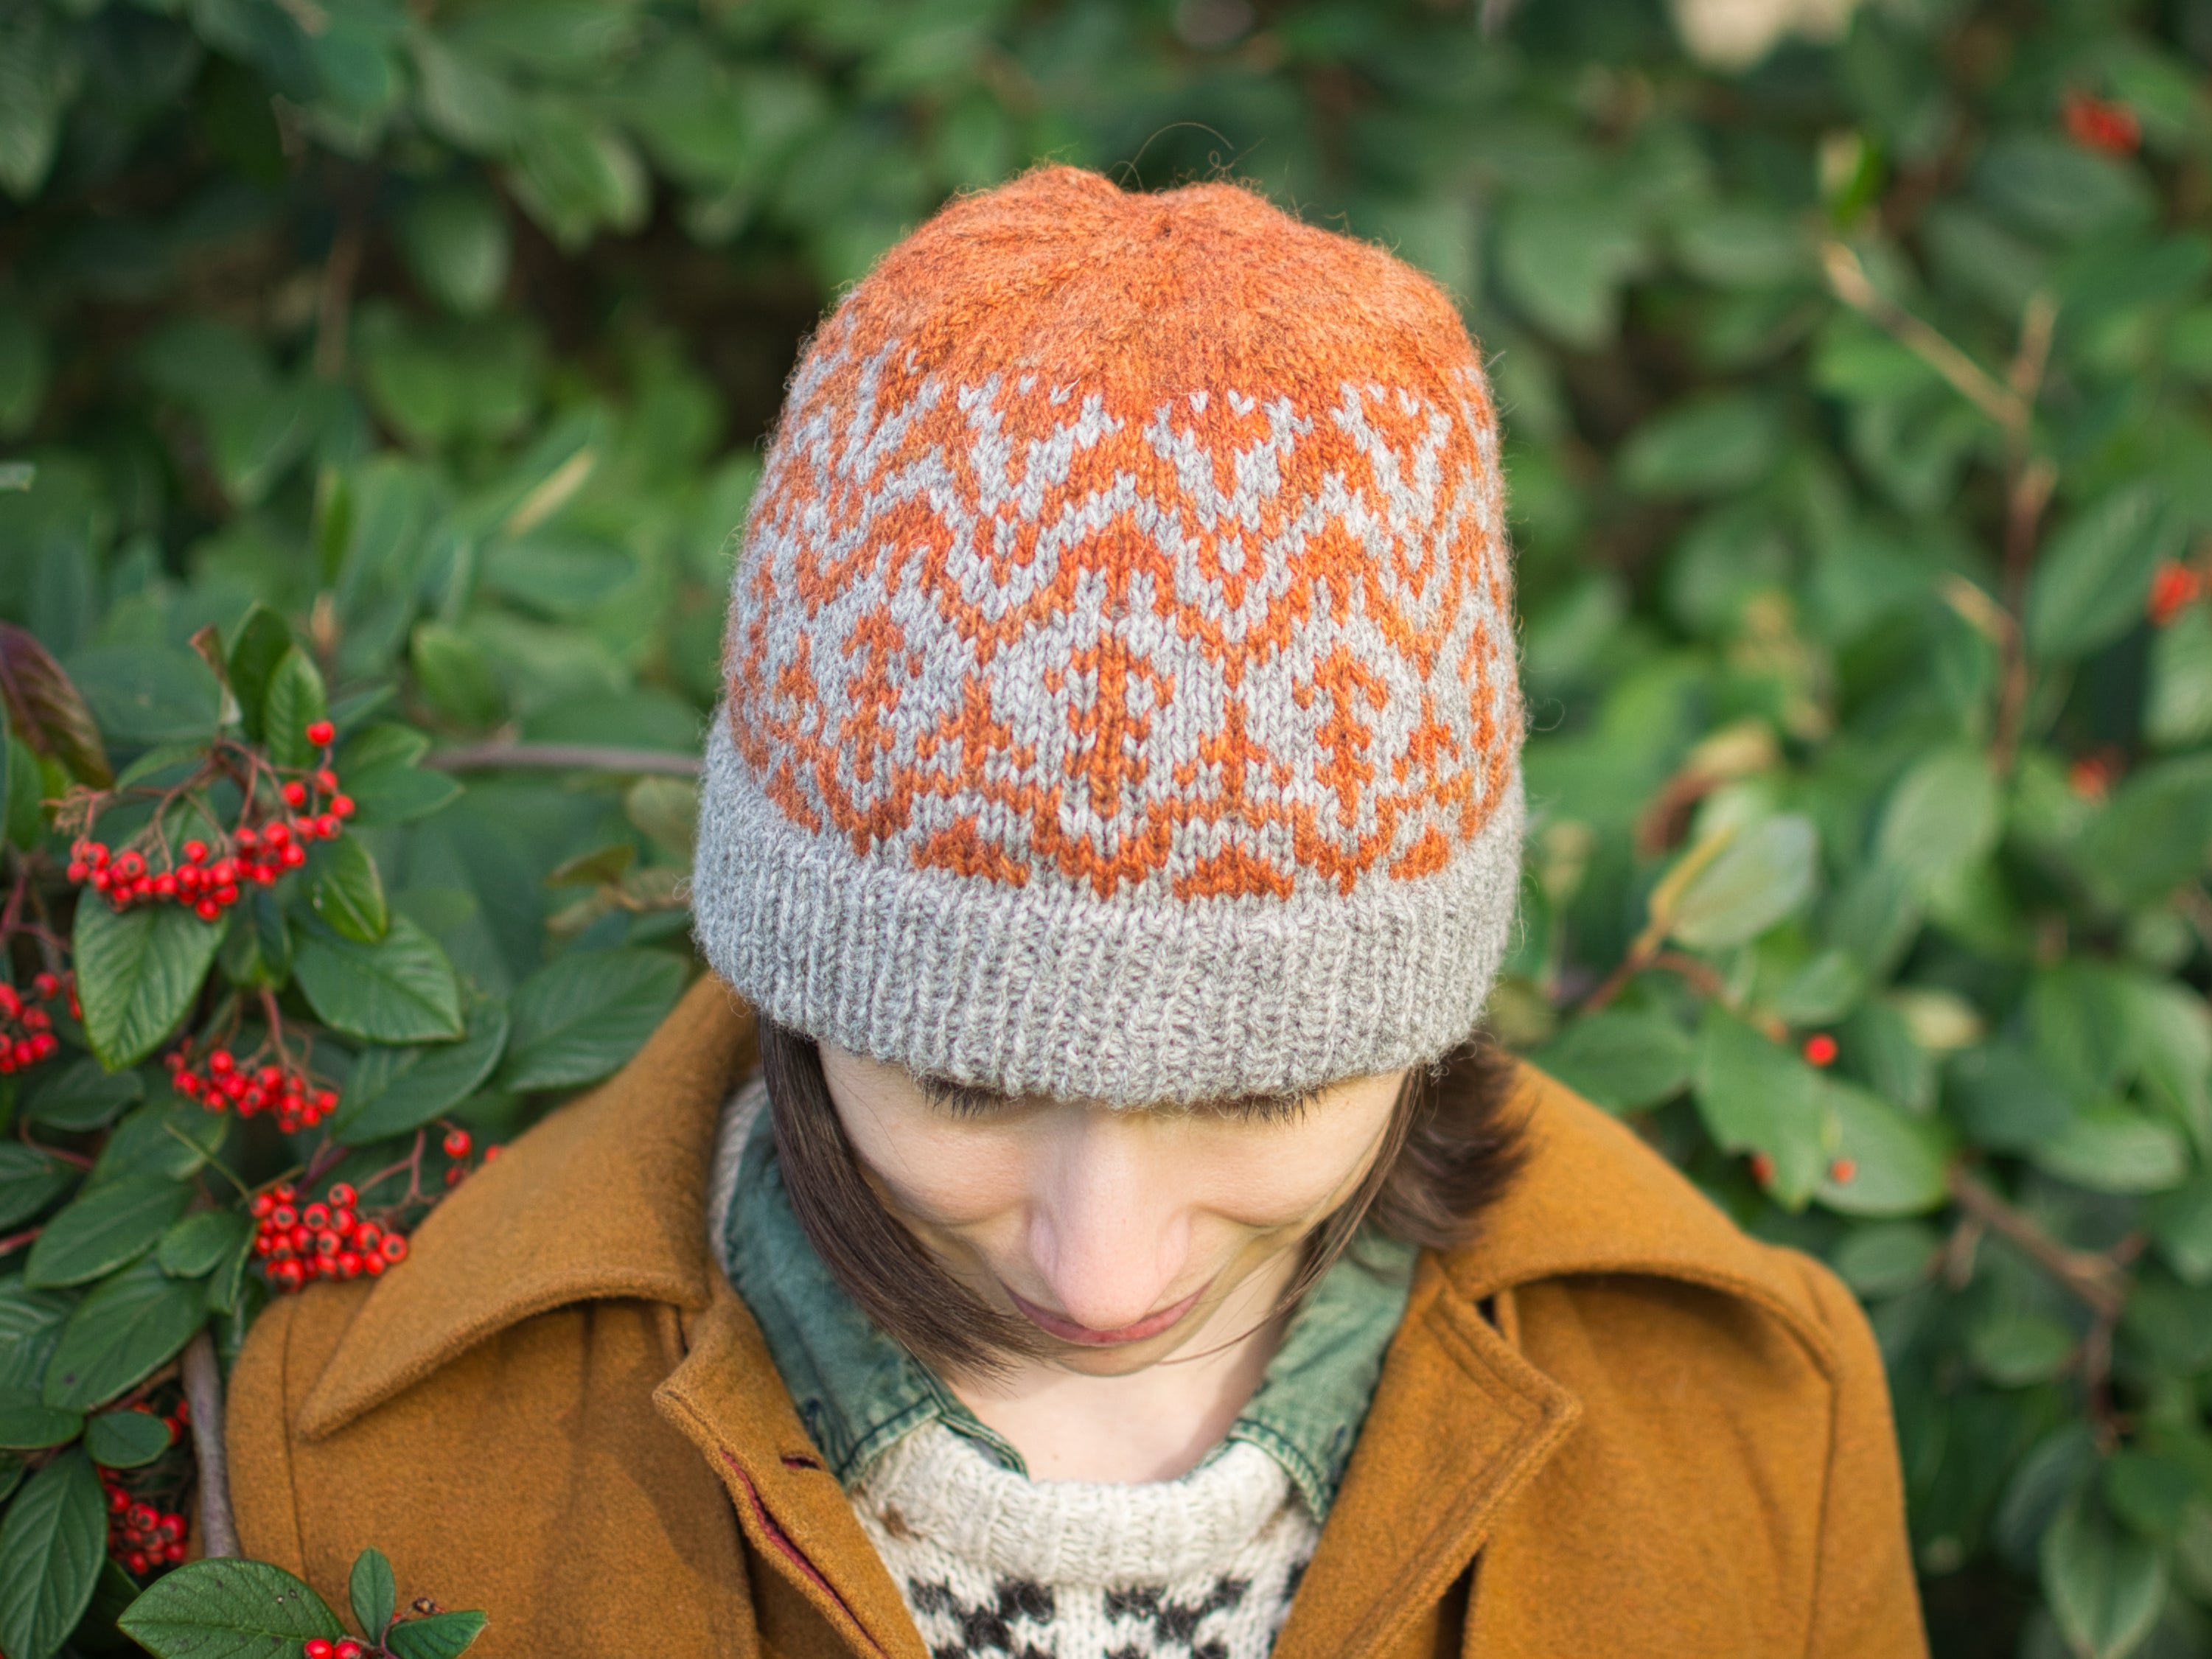 Spinnan Hat knitting pattern